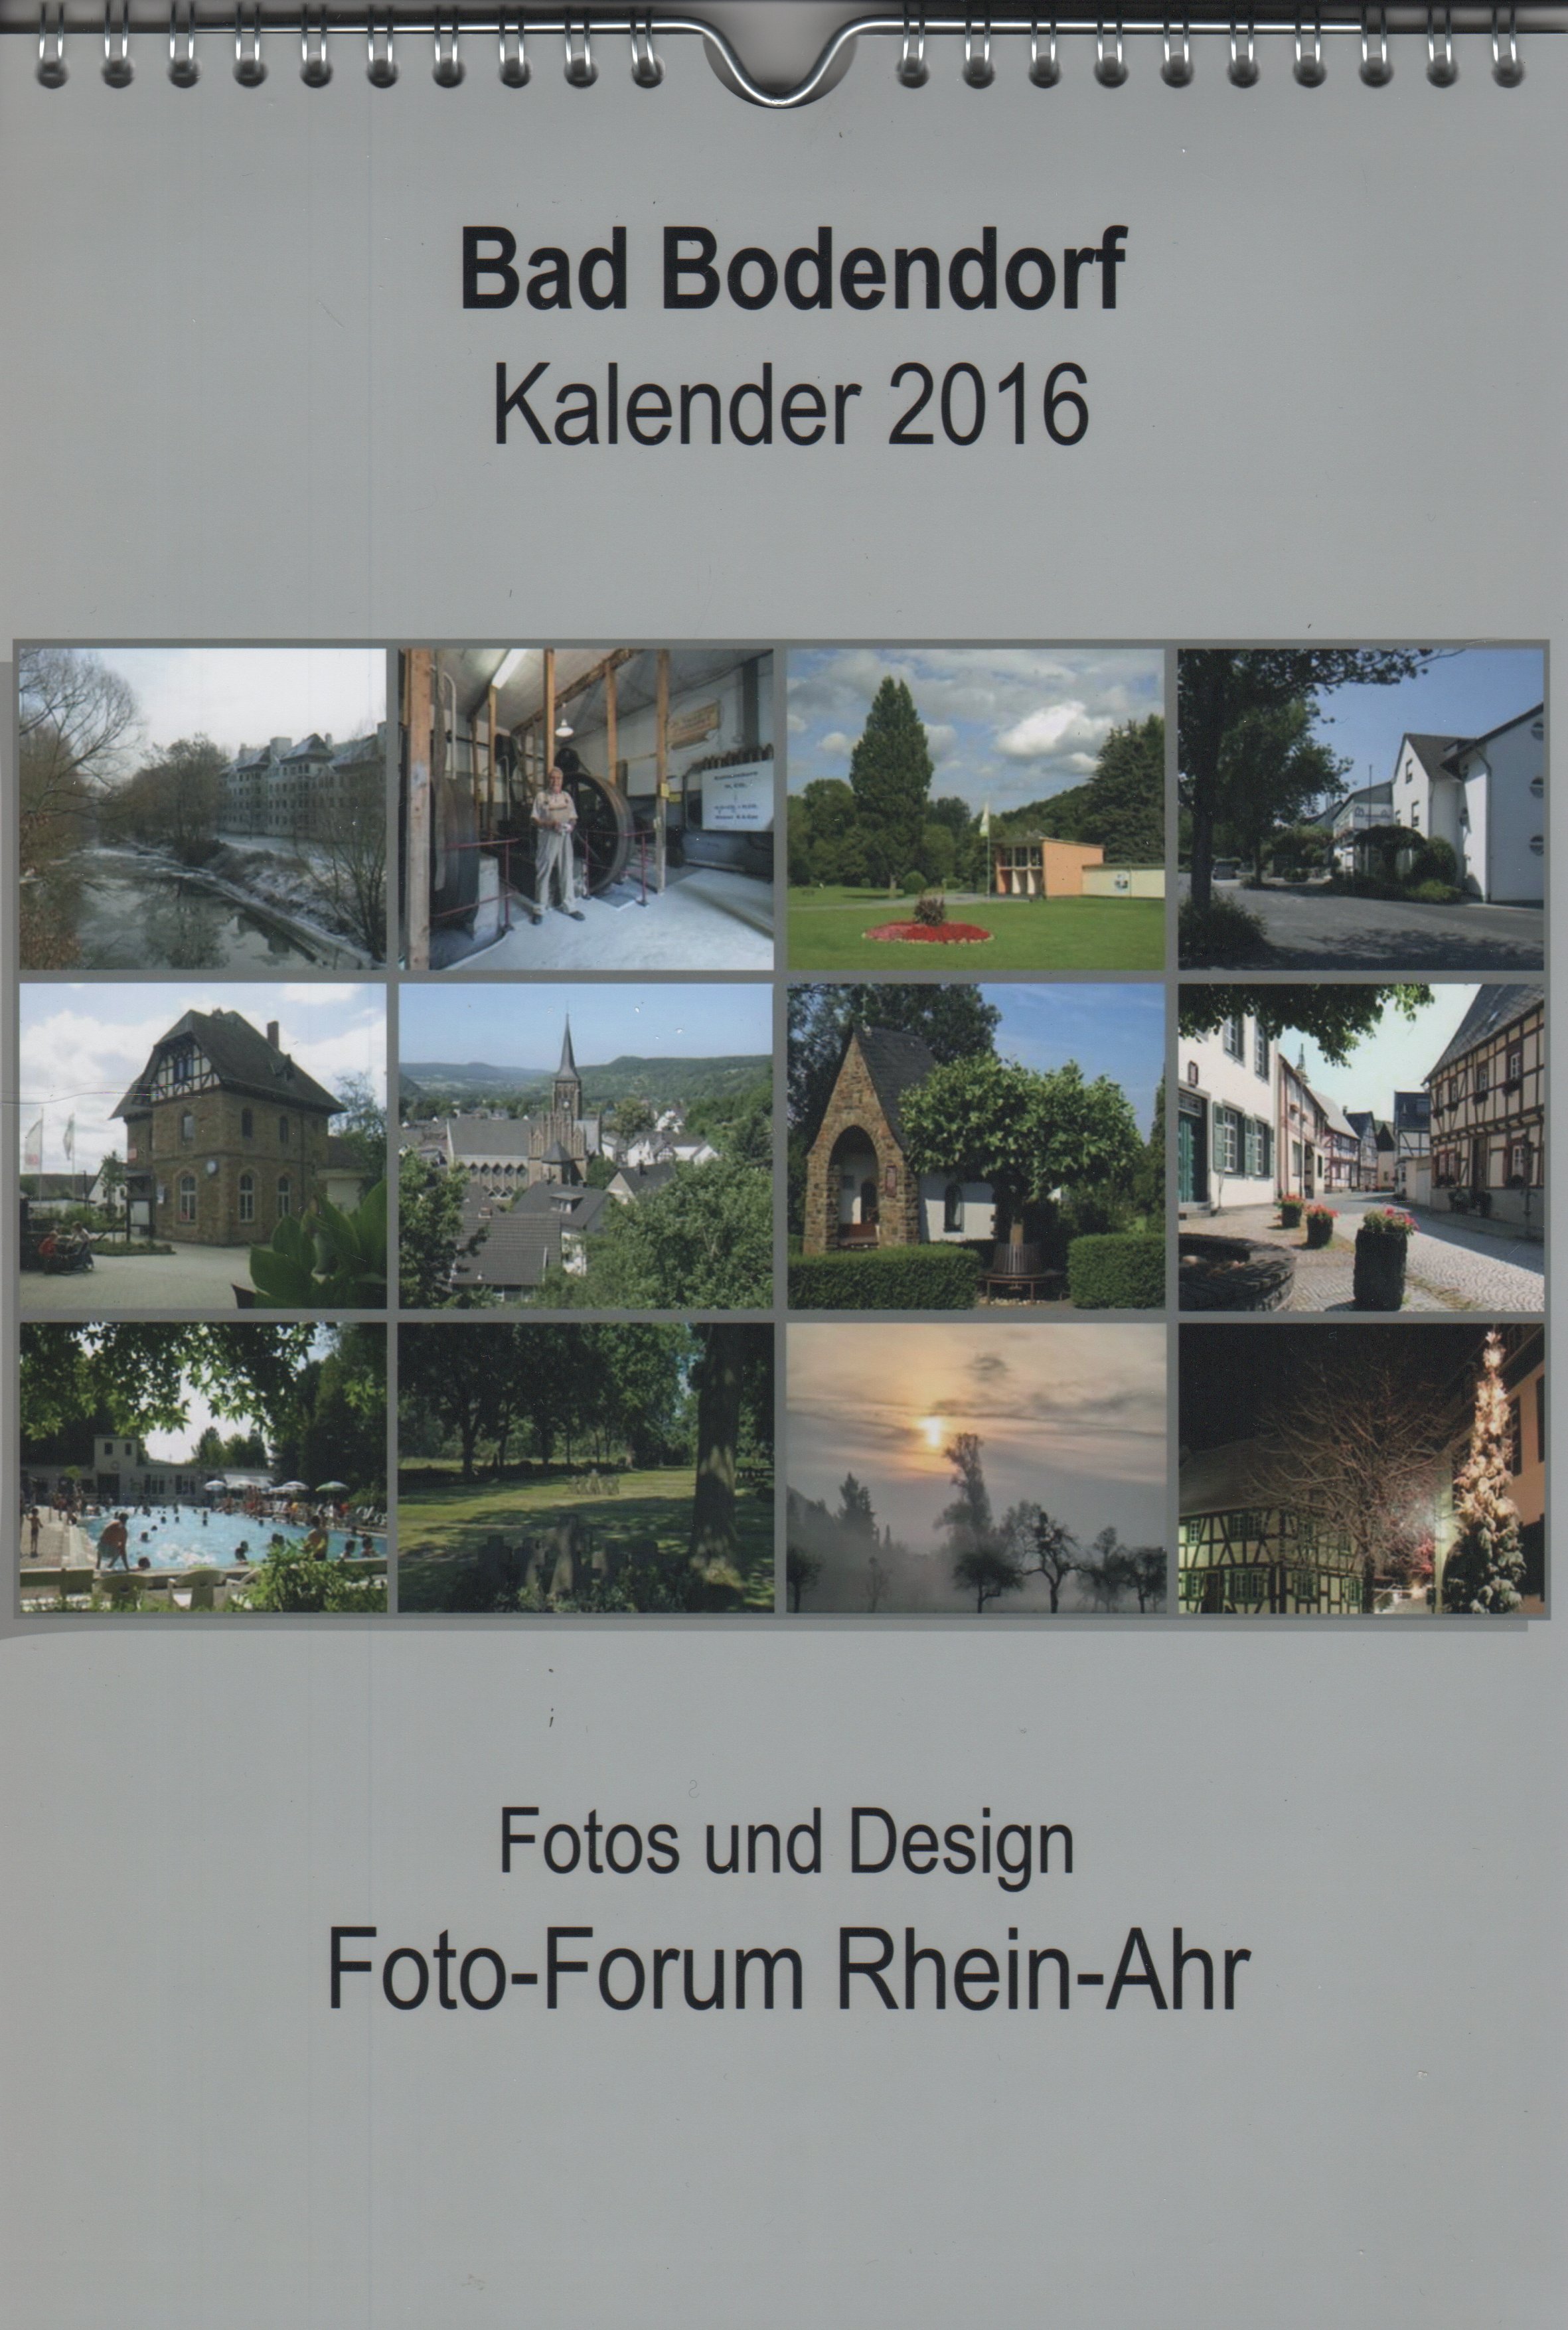 Kalender 2016 Bad Bodendorf (Foto-Forum Rhein-Ahr CC BY-NC-SA)